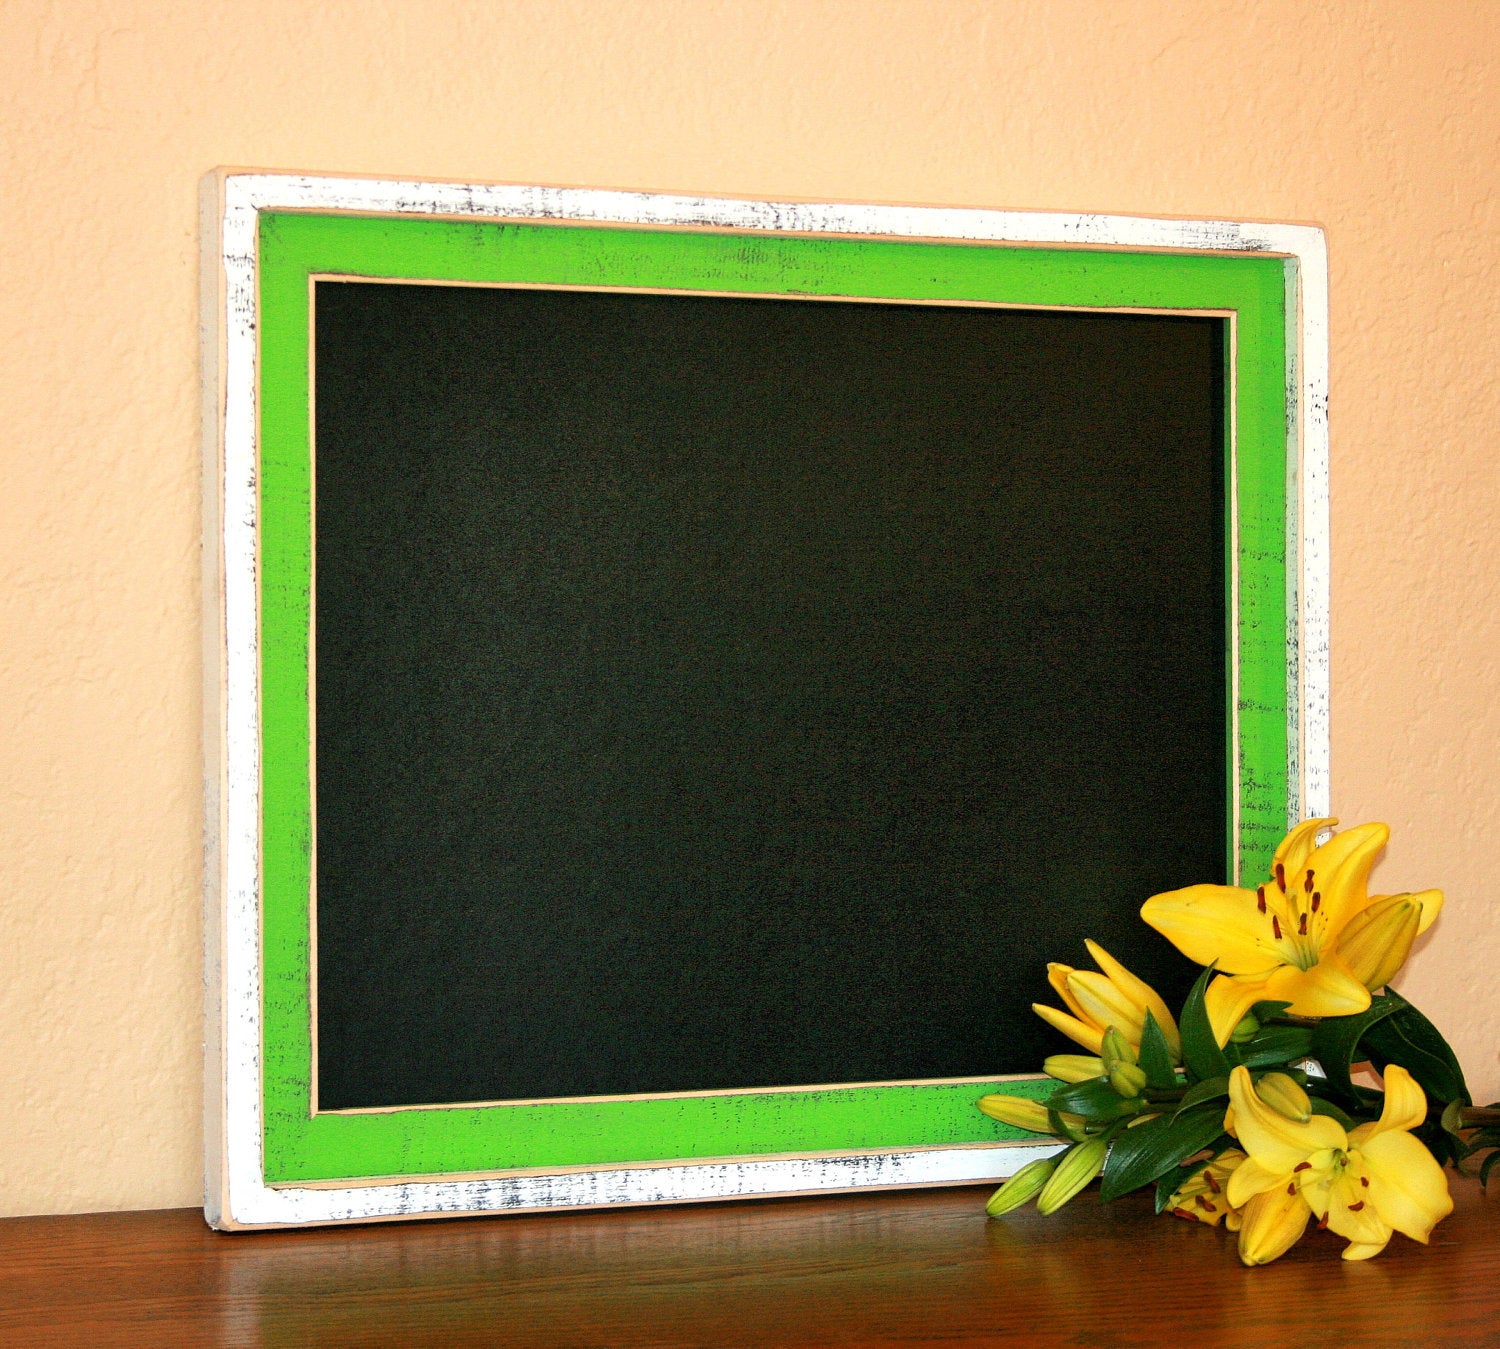 Framed Magnetic Chalkboard Chalk board bulletin memo organizer message wedding escort card display Choose from 63 colors Shake it up Baby